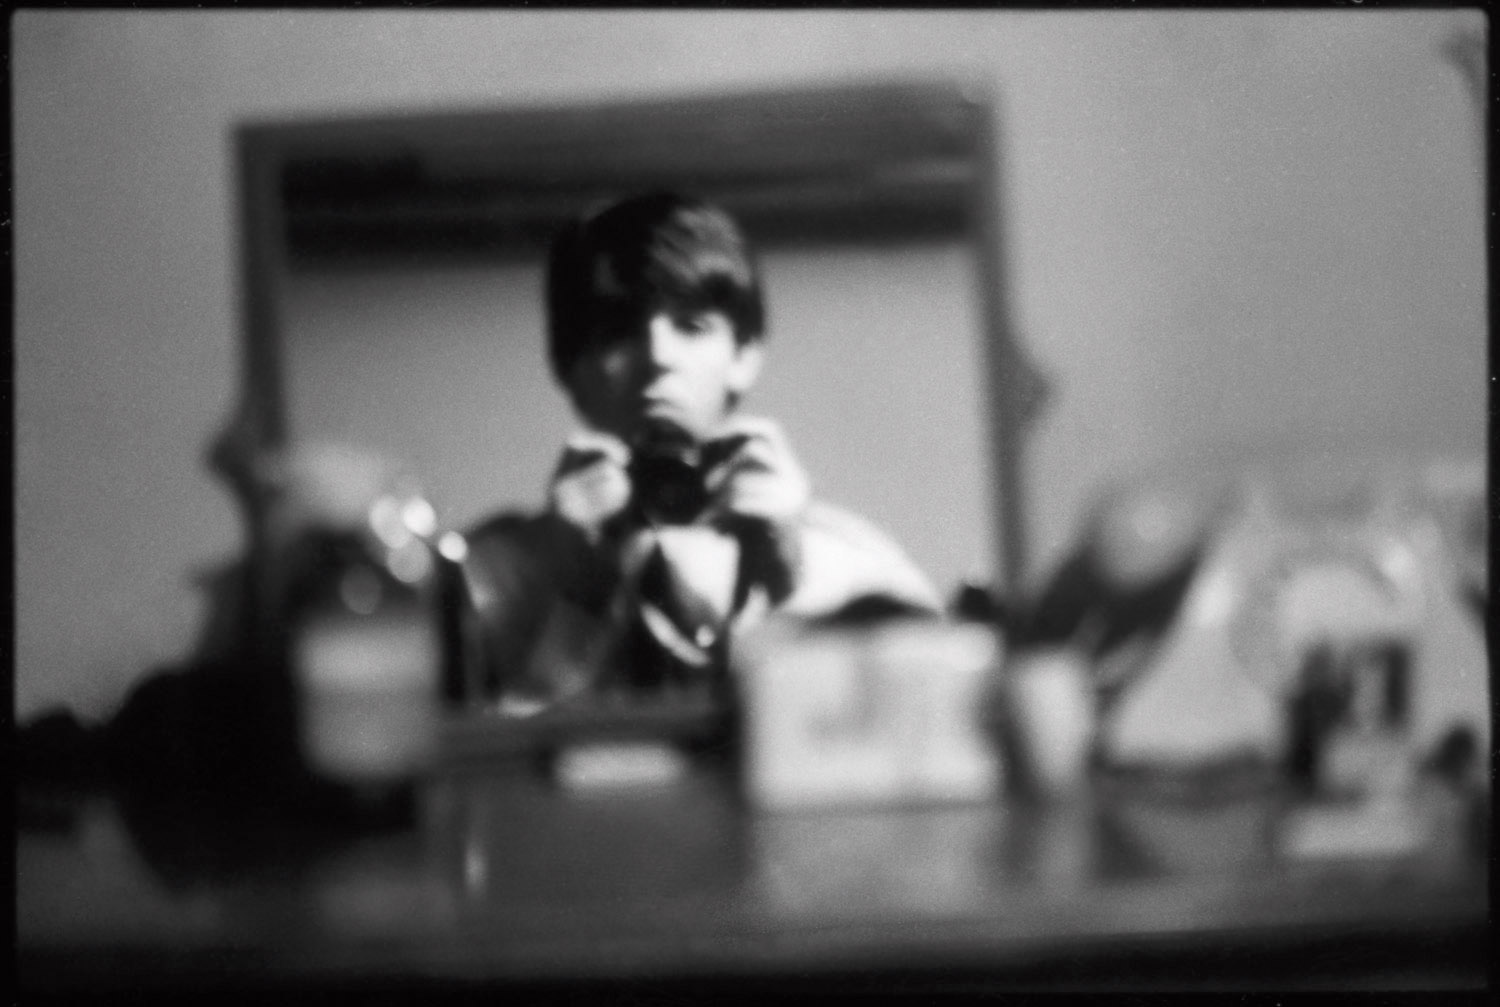 Self-portrait. London, 1963. © 1963 - 1964 Paul McCartney